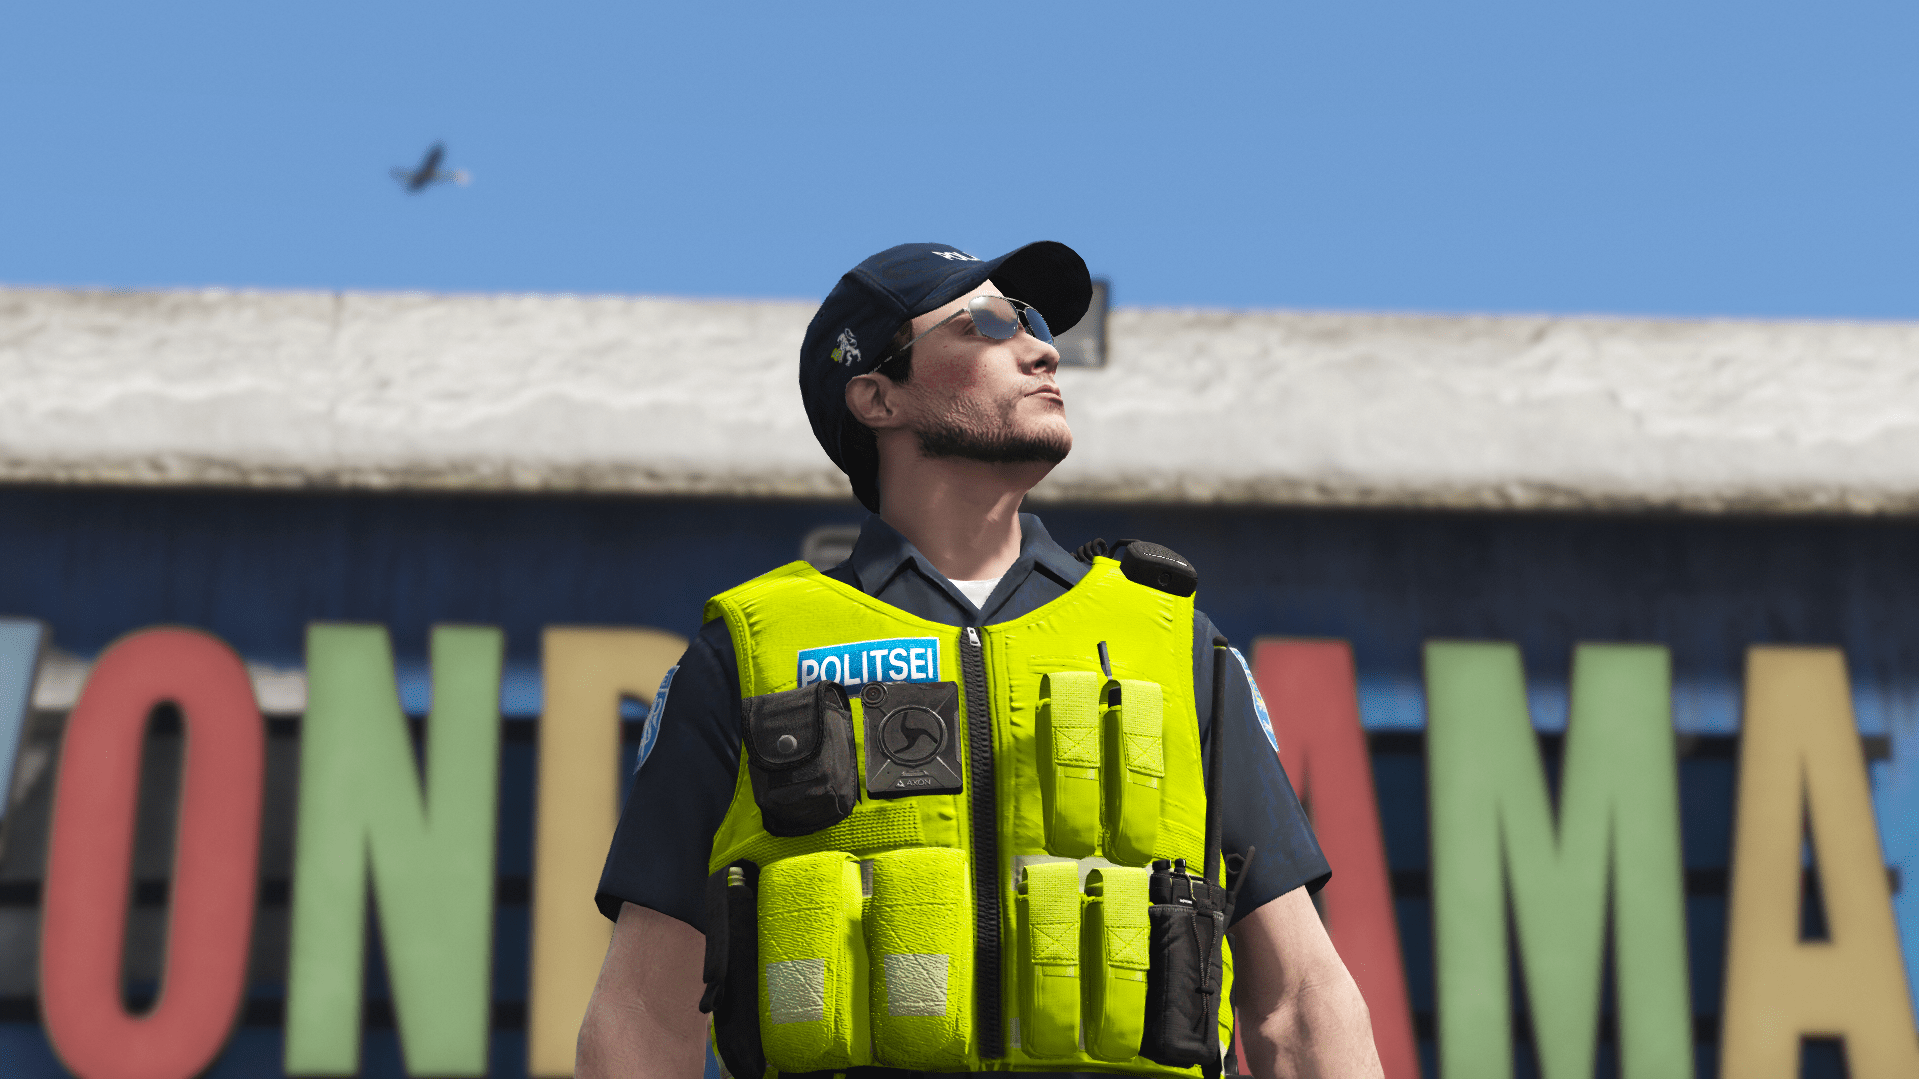 Police uniform for gta 5 фото 33